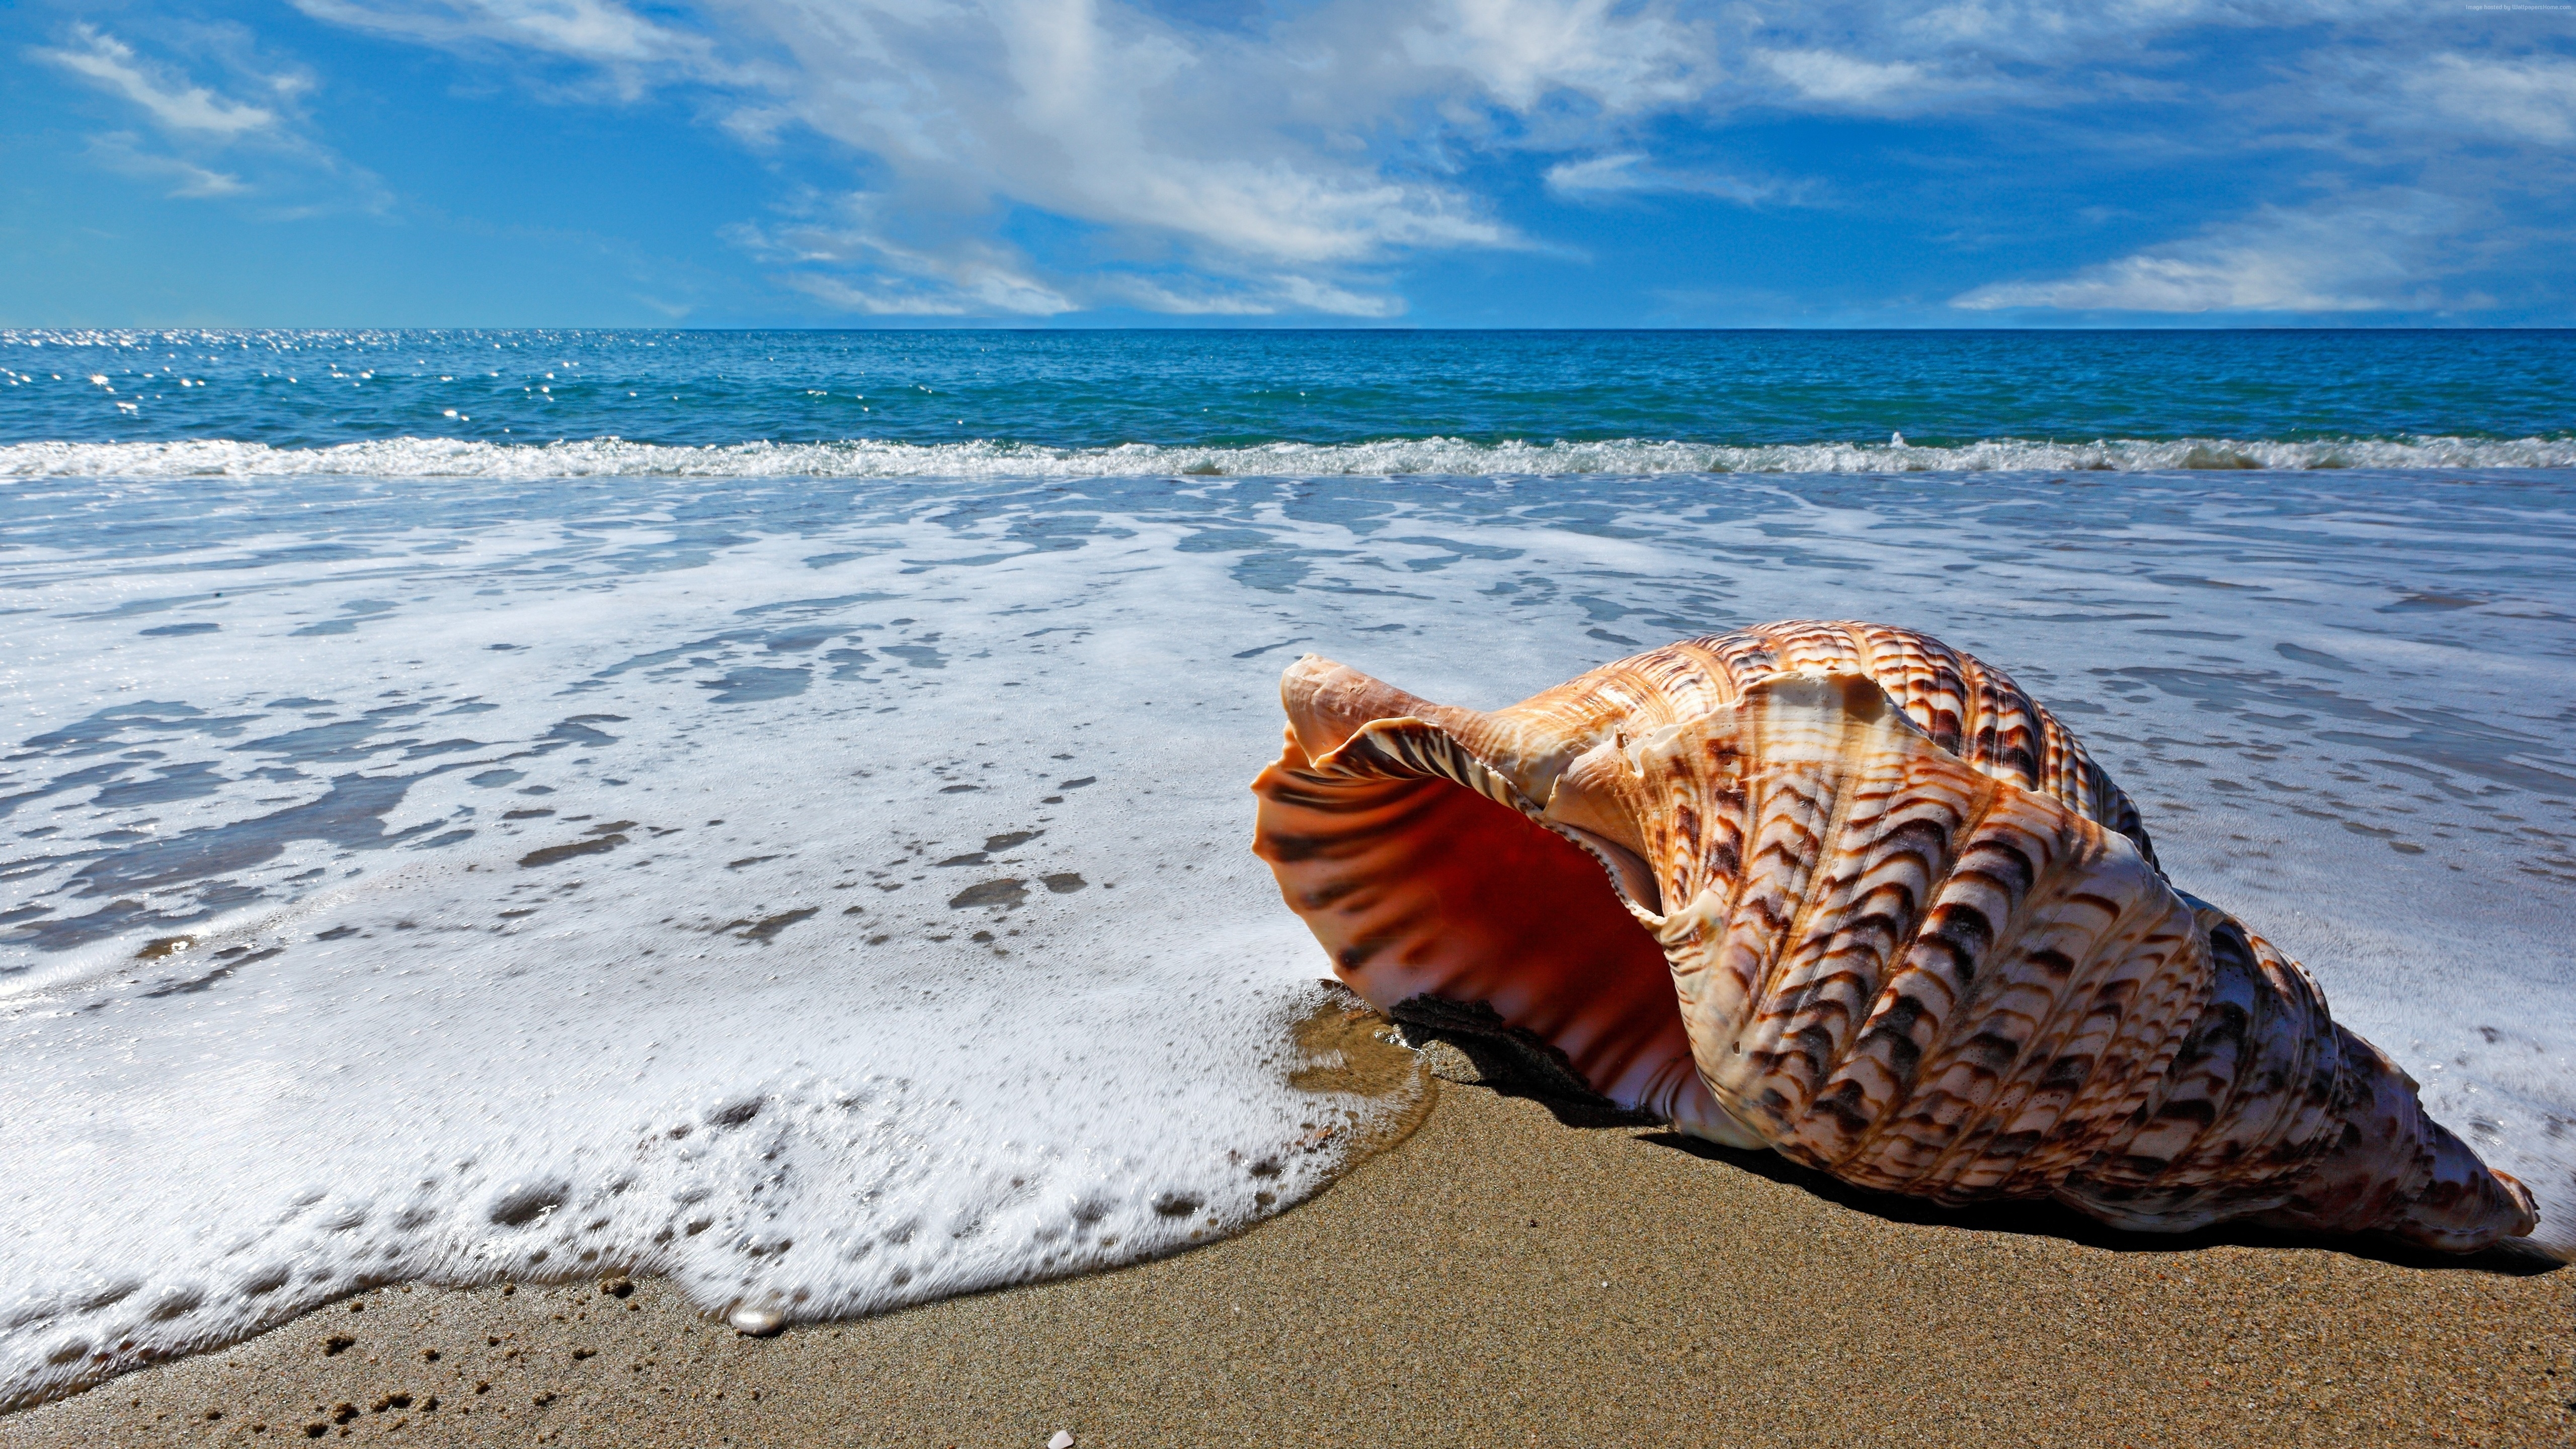 Sea Shell on Sea Shore for 5120 x 2880 5K Ultra HD resolution